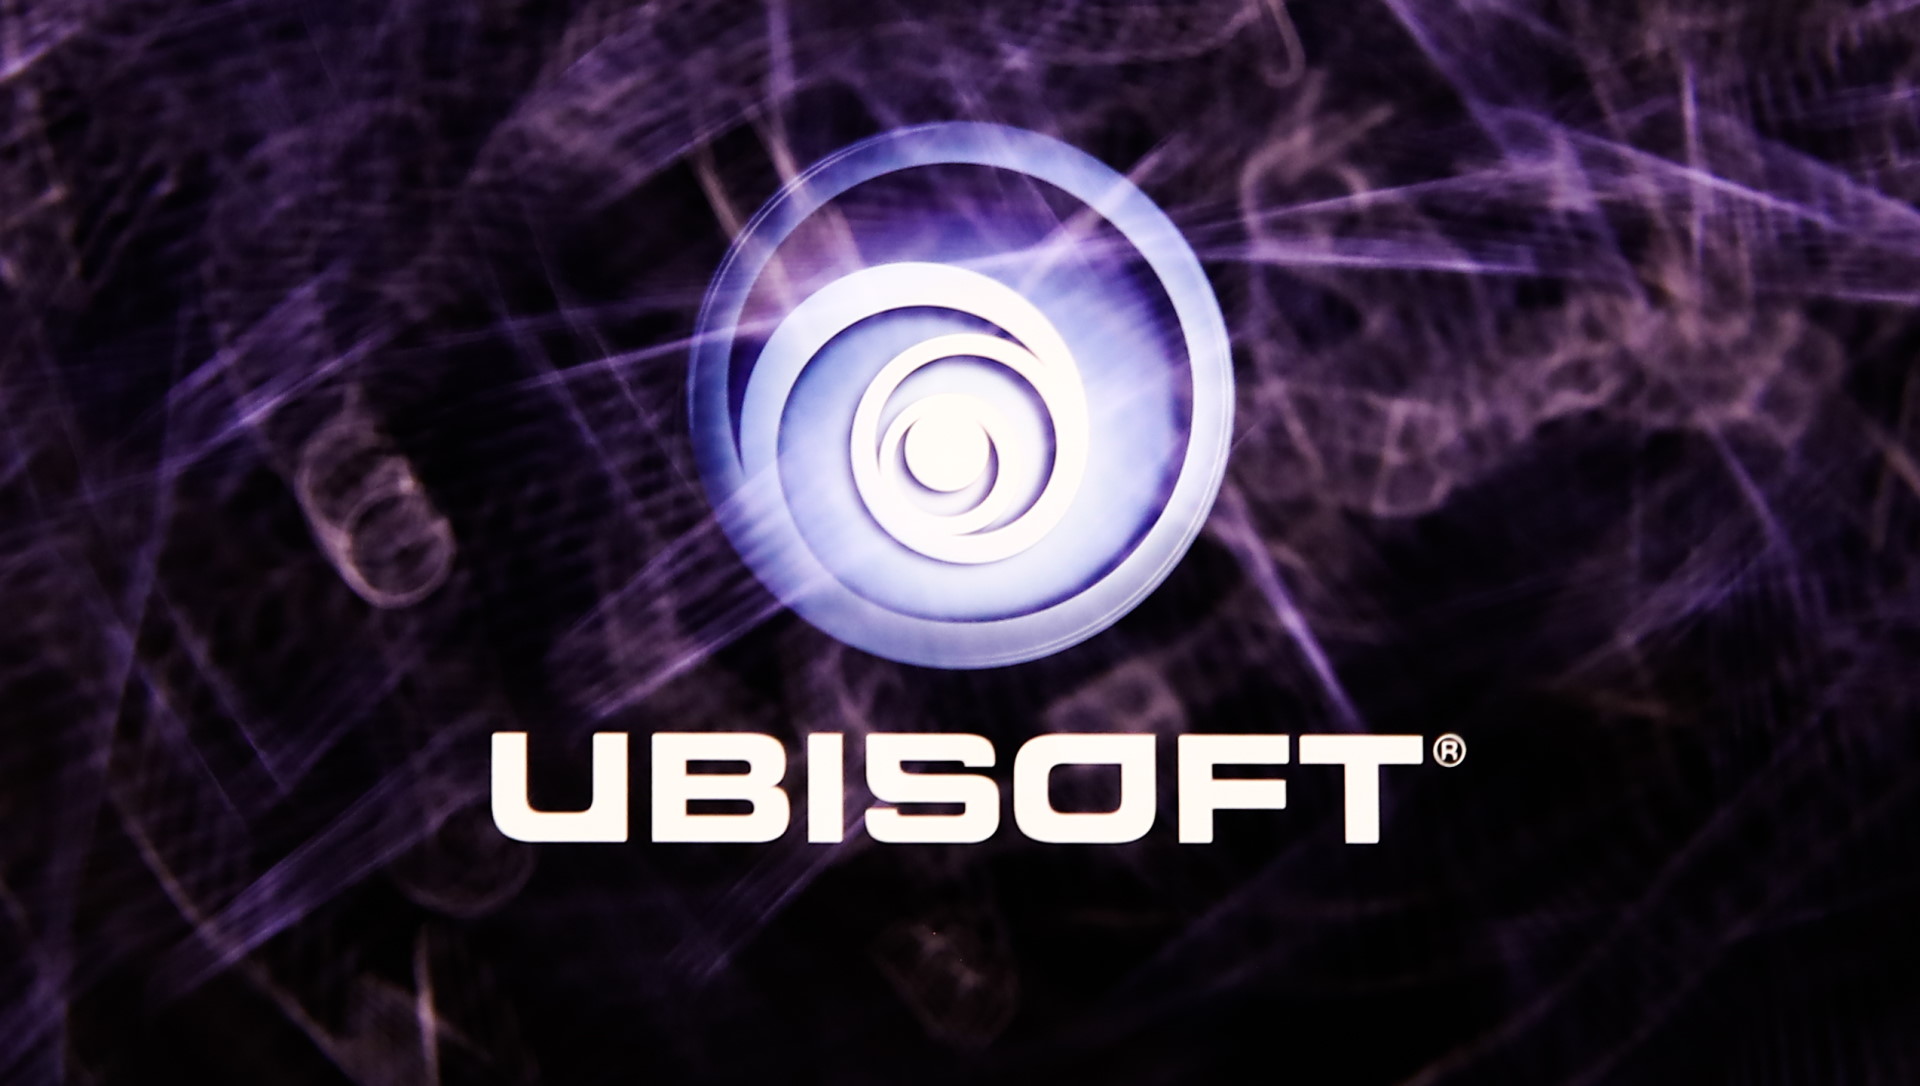  Ubisoft provides emergency housing and funding for employees fleeing Ukraine 